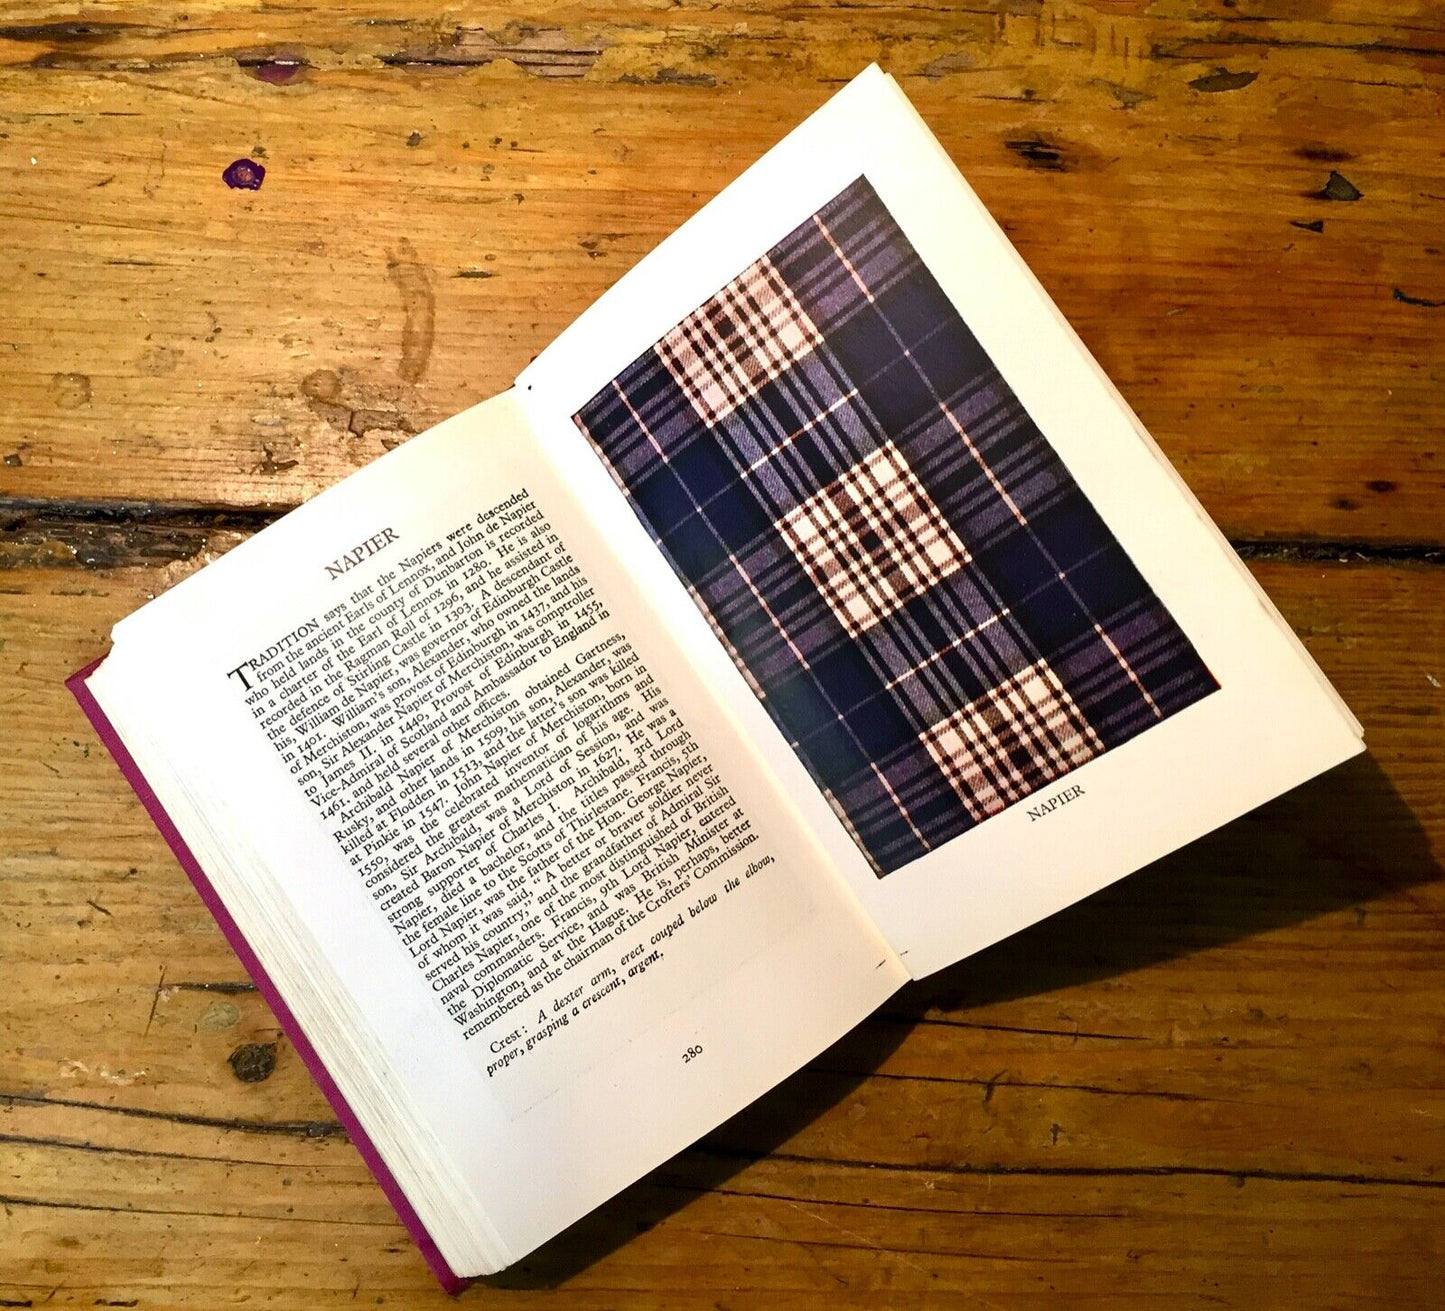 The Clans and Tartans of Scotland Hardback Book By Robert Bain, Scottish Kilts